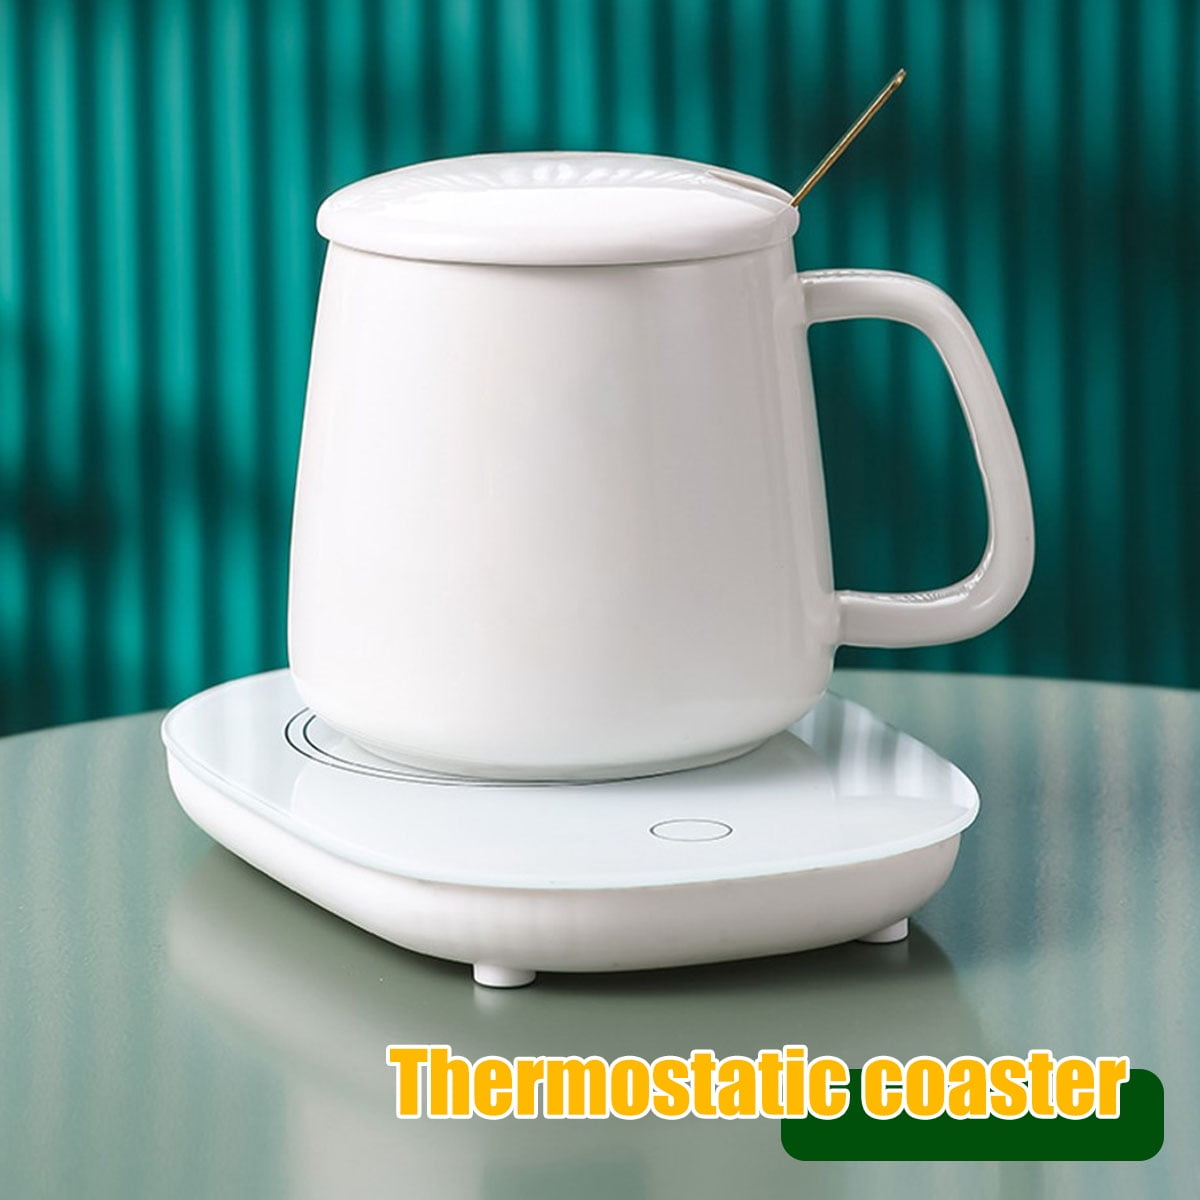 Verde P Prettyia Thermostatic Cup Warmer 55 °C Small Appliances Coffee Mug Warmer for Home Coffee 